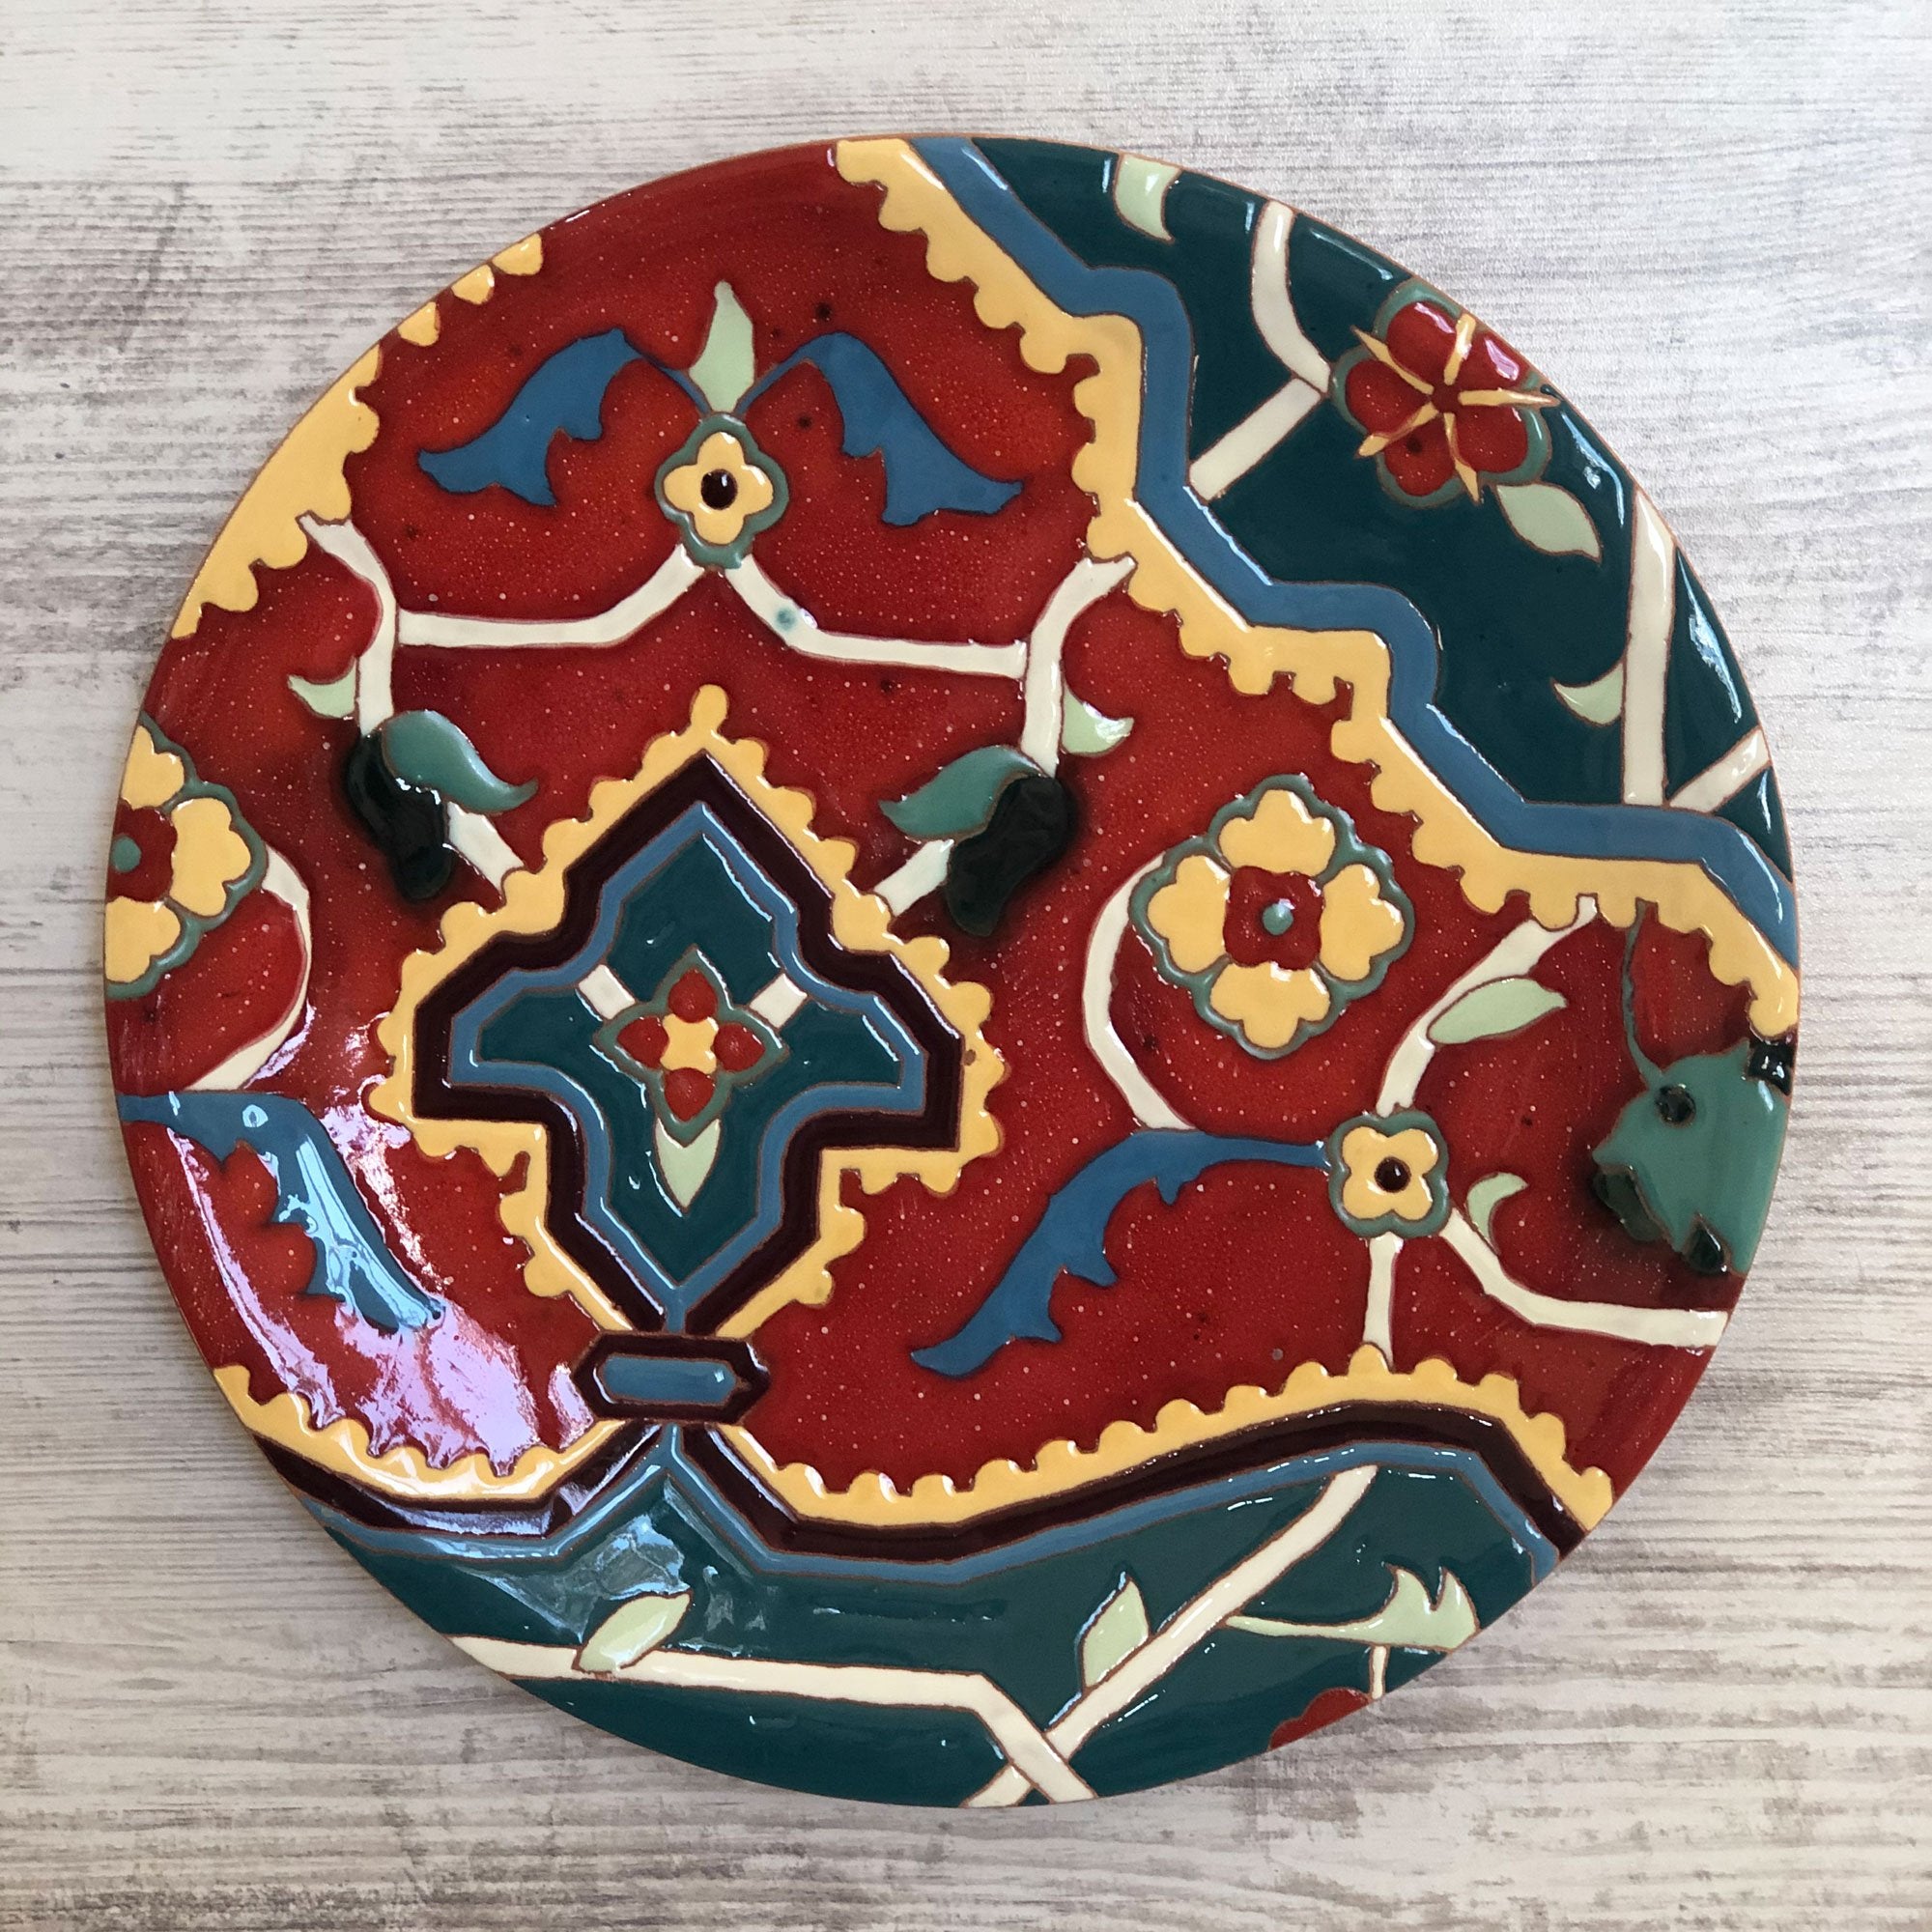 Mane Tiles Ceramic Plate with Armenian Carpet Ornaments